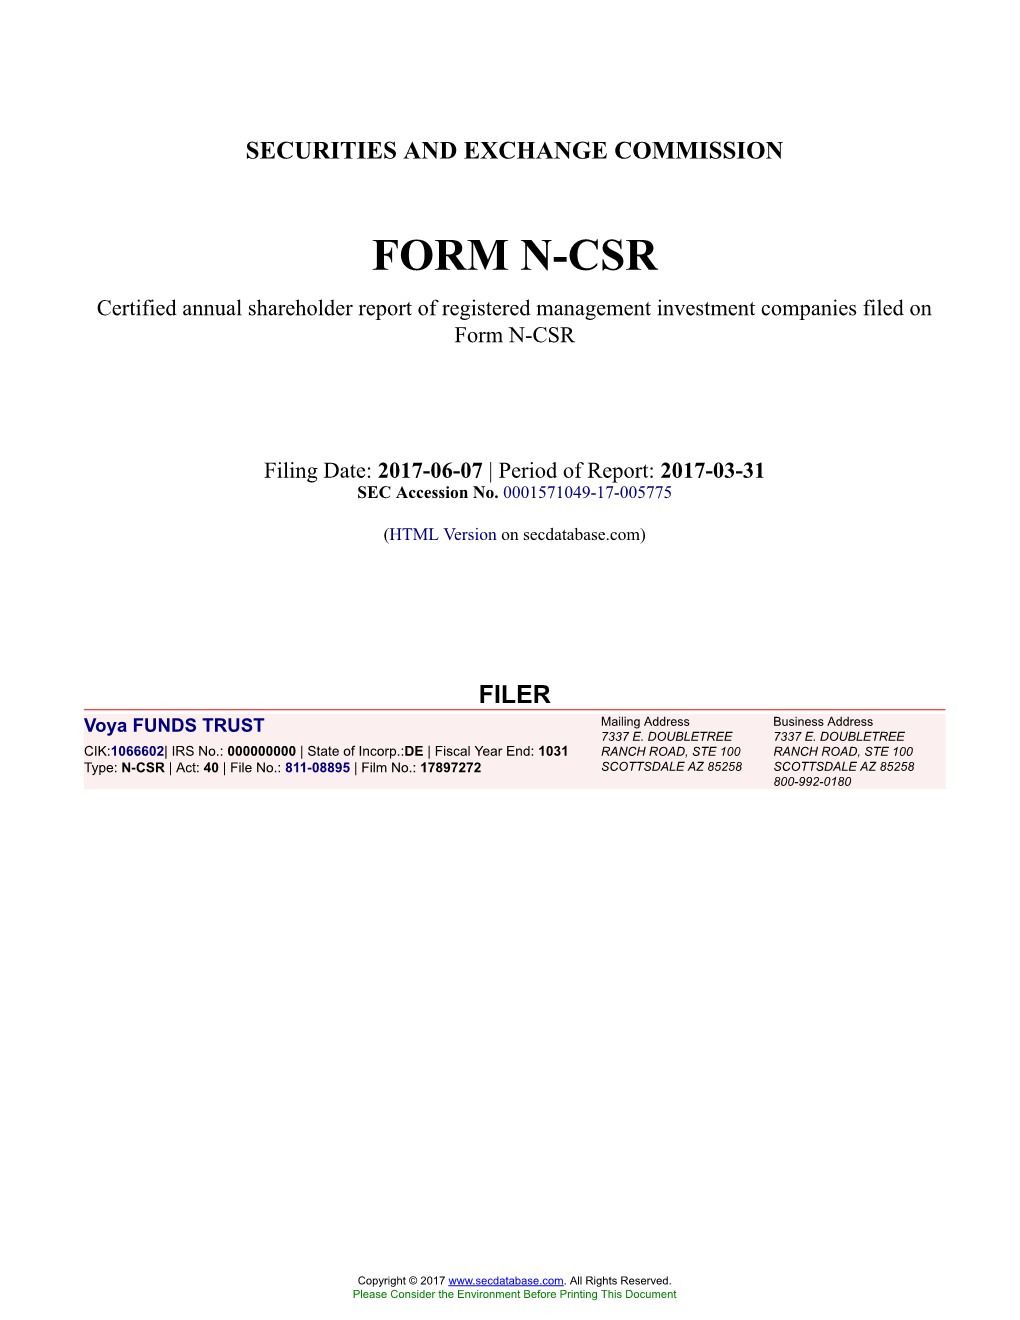 Voya FUNDS TRUST Form N-CSR Filed 2017-06-07